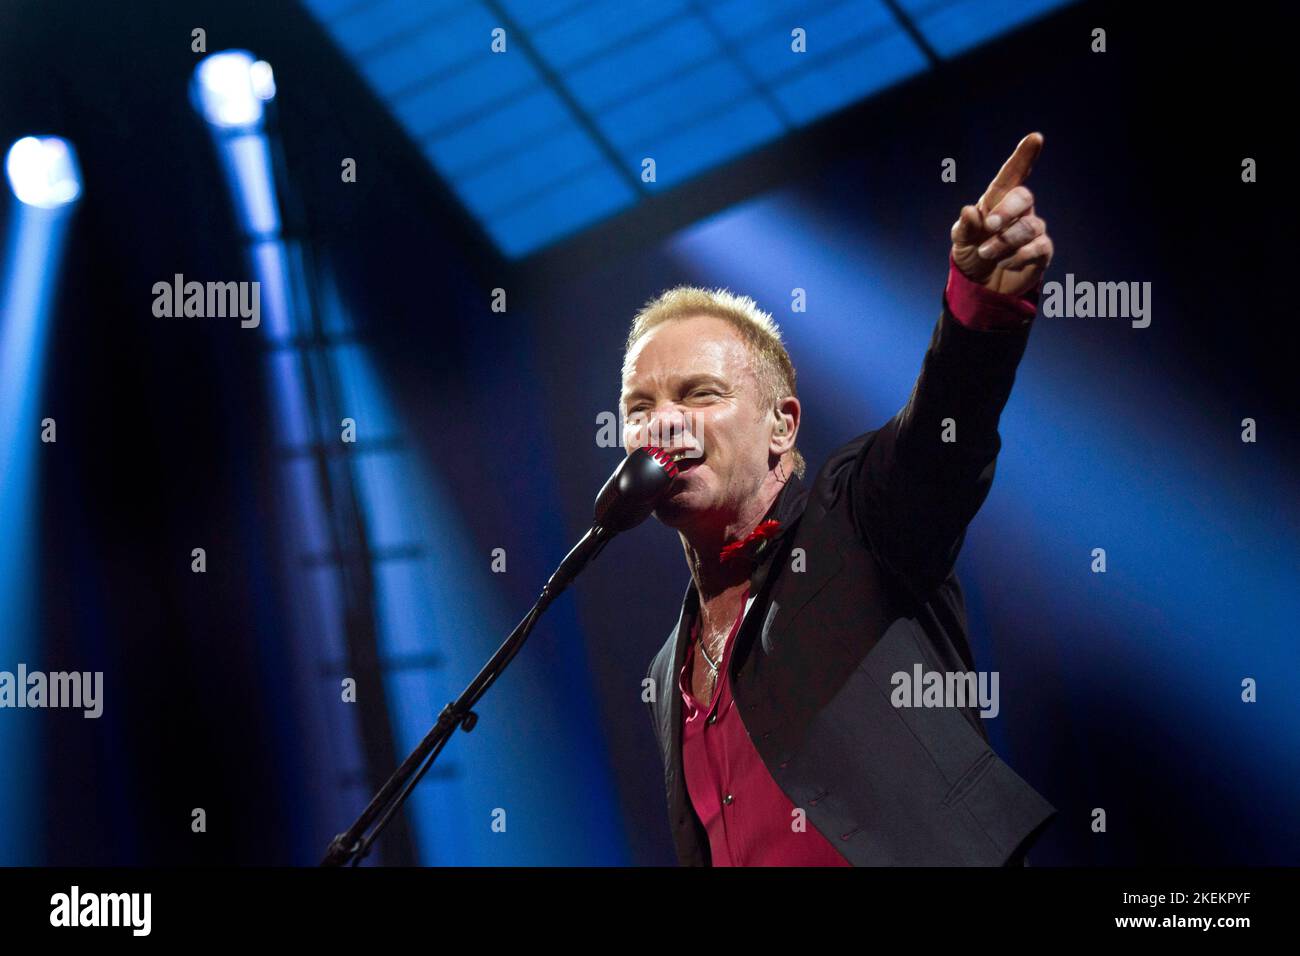 Sting in concerto a Het Gelredome Arnhem Holland alla Symphonica in Rosso. 2010. vvvbvanbree fotografie. Foto Stock